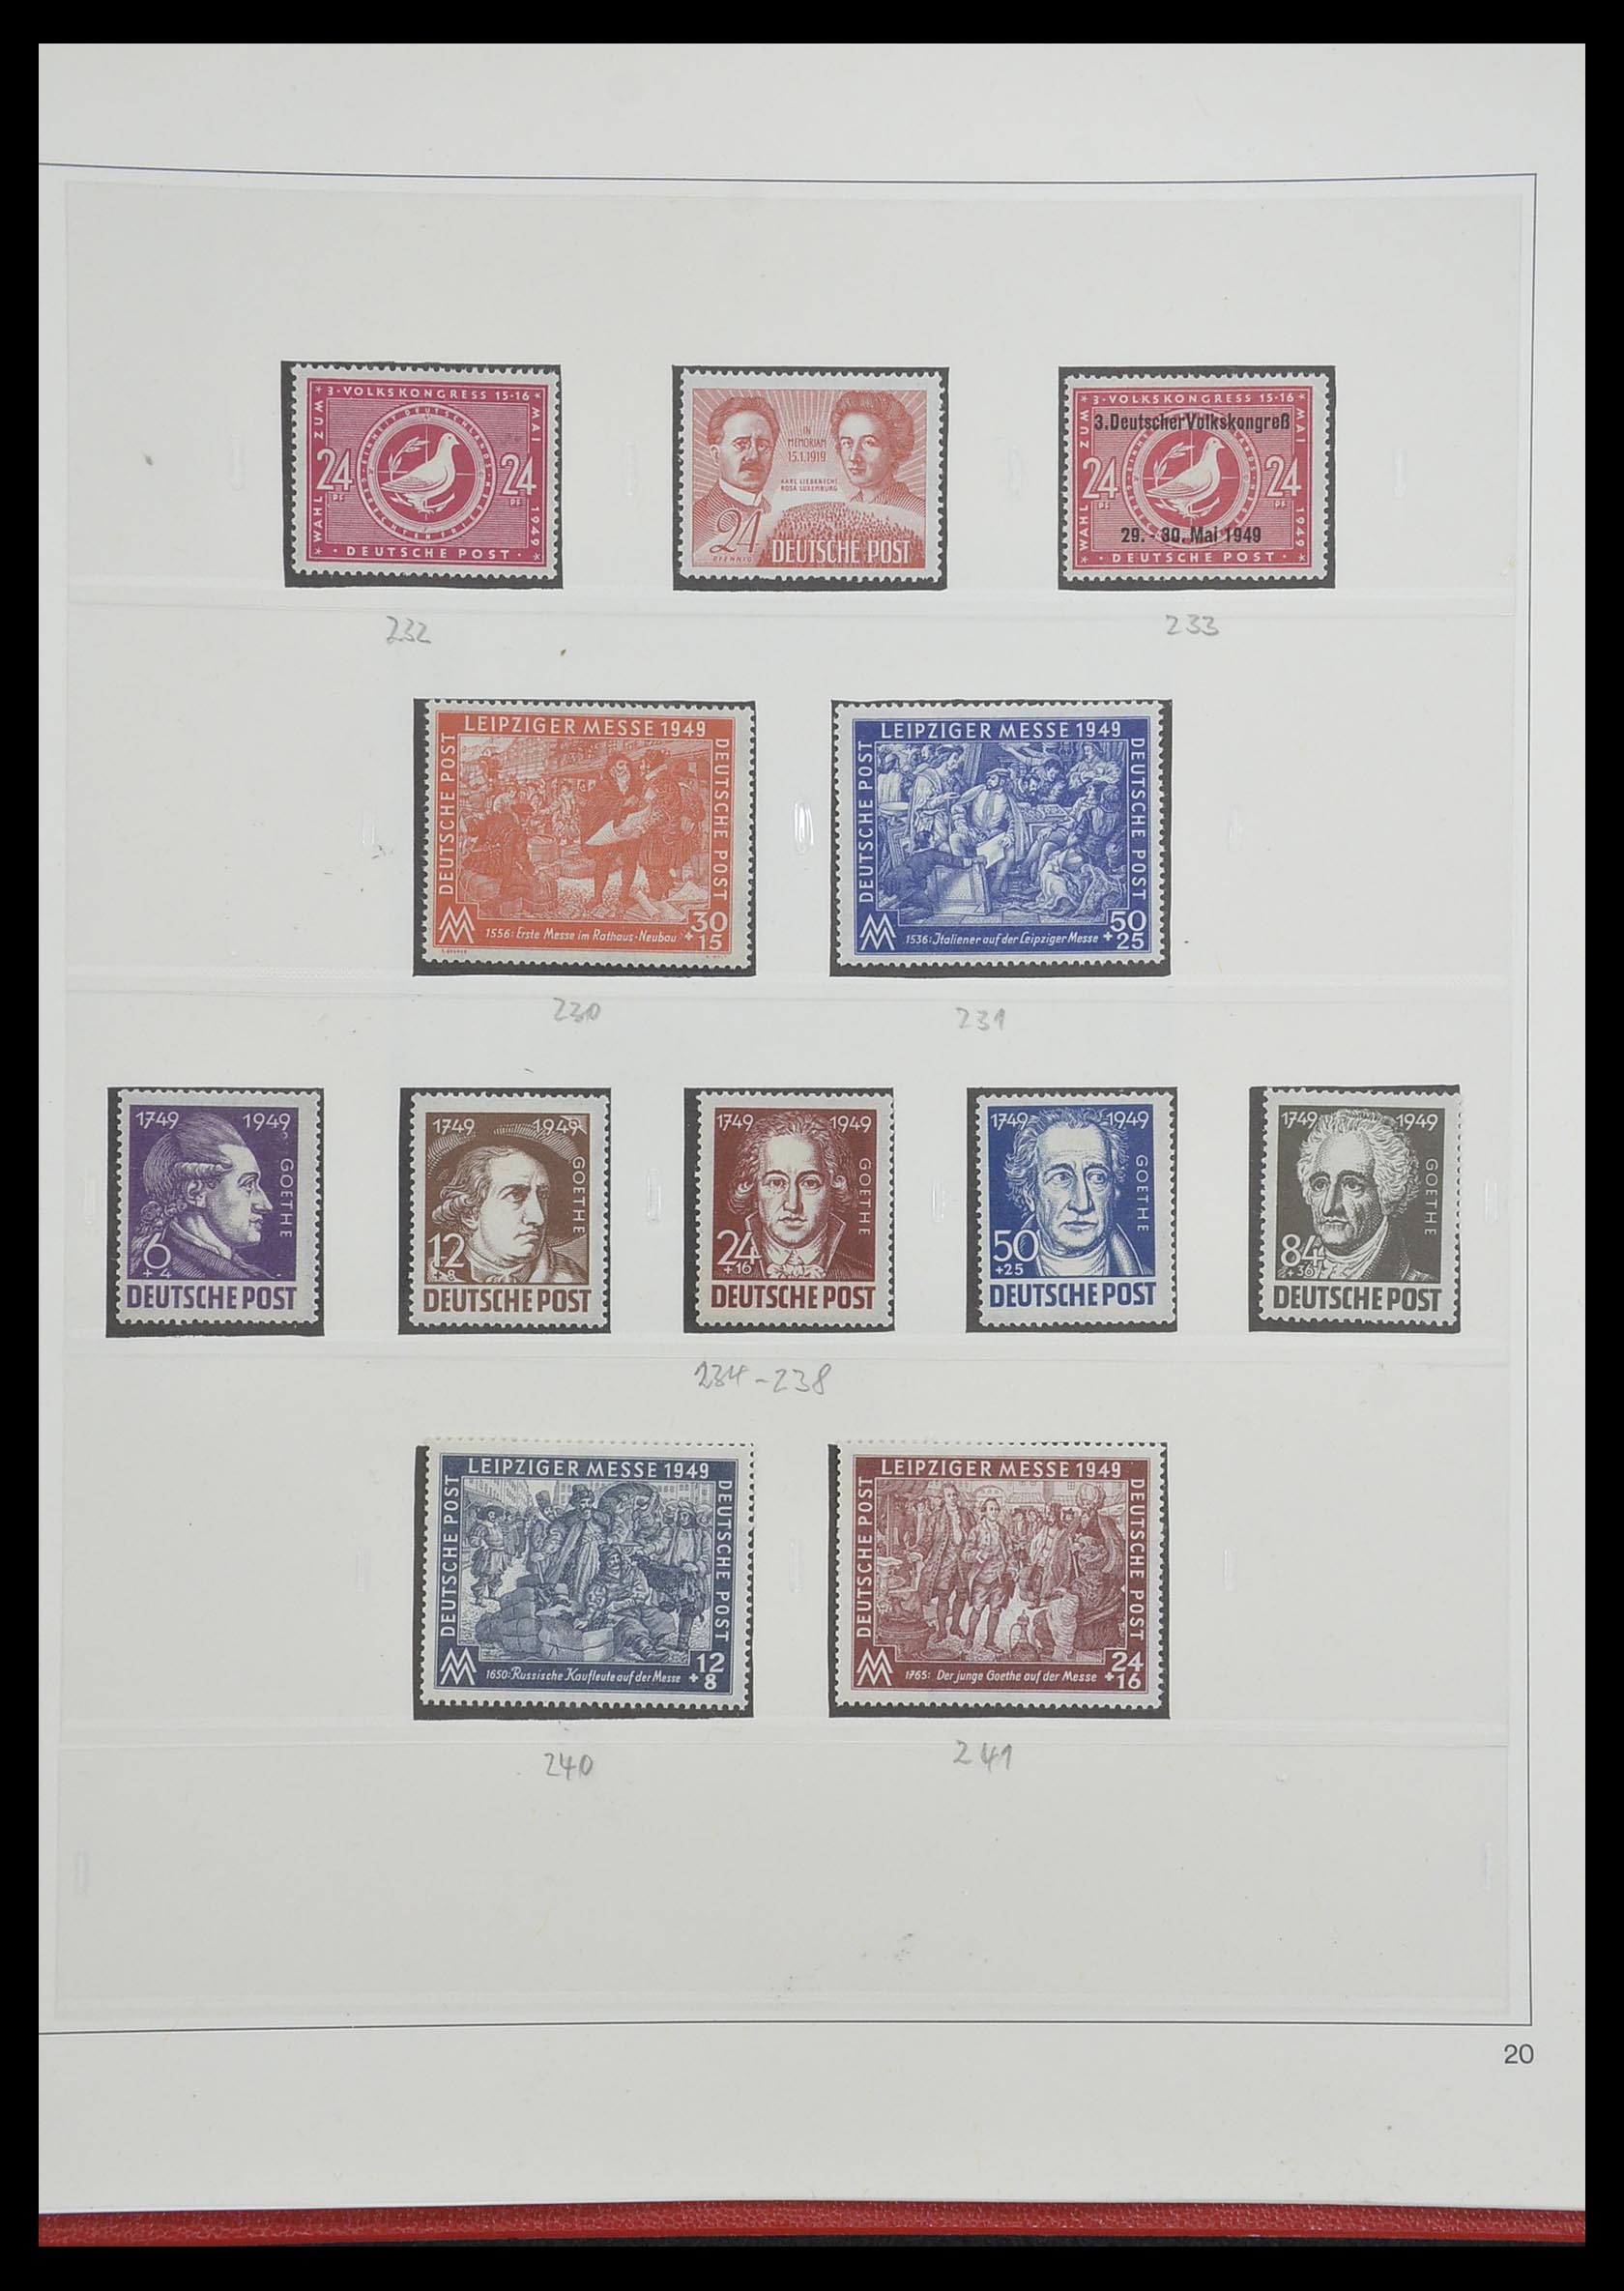 33208 053 - Stamp collection 33208 German Zones 1945-1949.